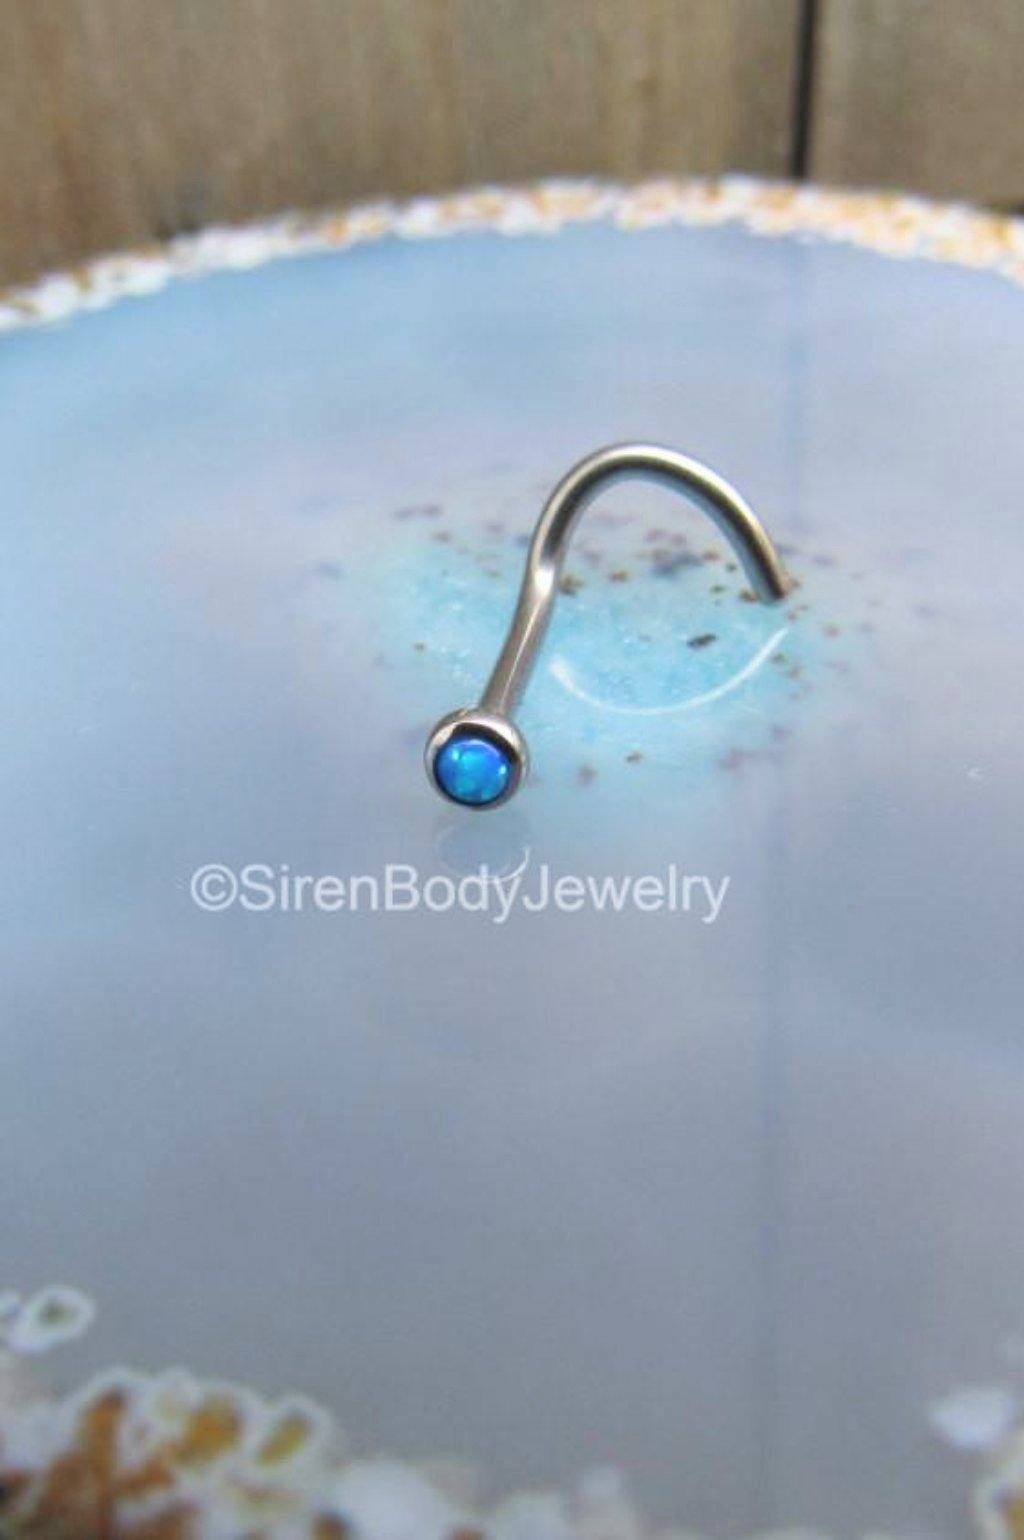 Blue opal nose piercing screw 18g titanium nostril body piercing jewelry stud - Siren Body Jewelry